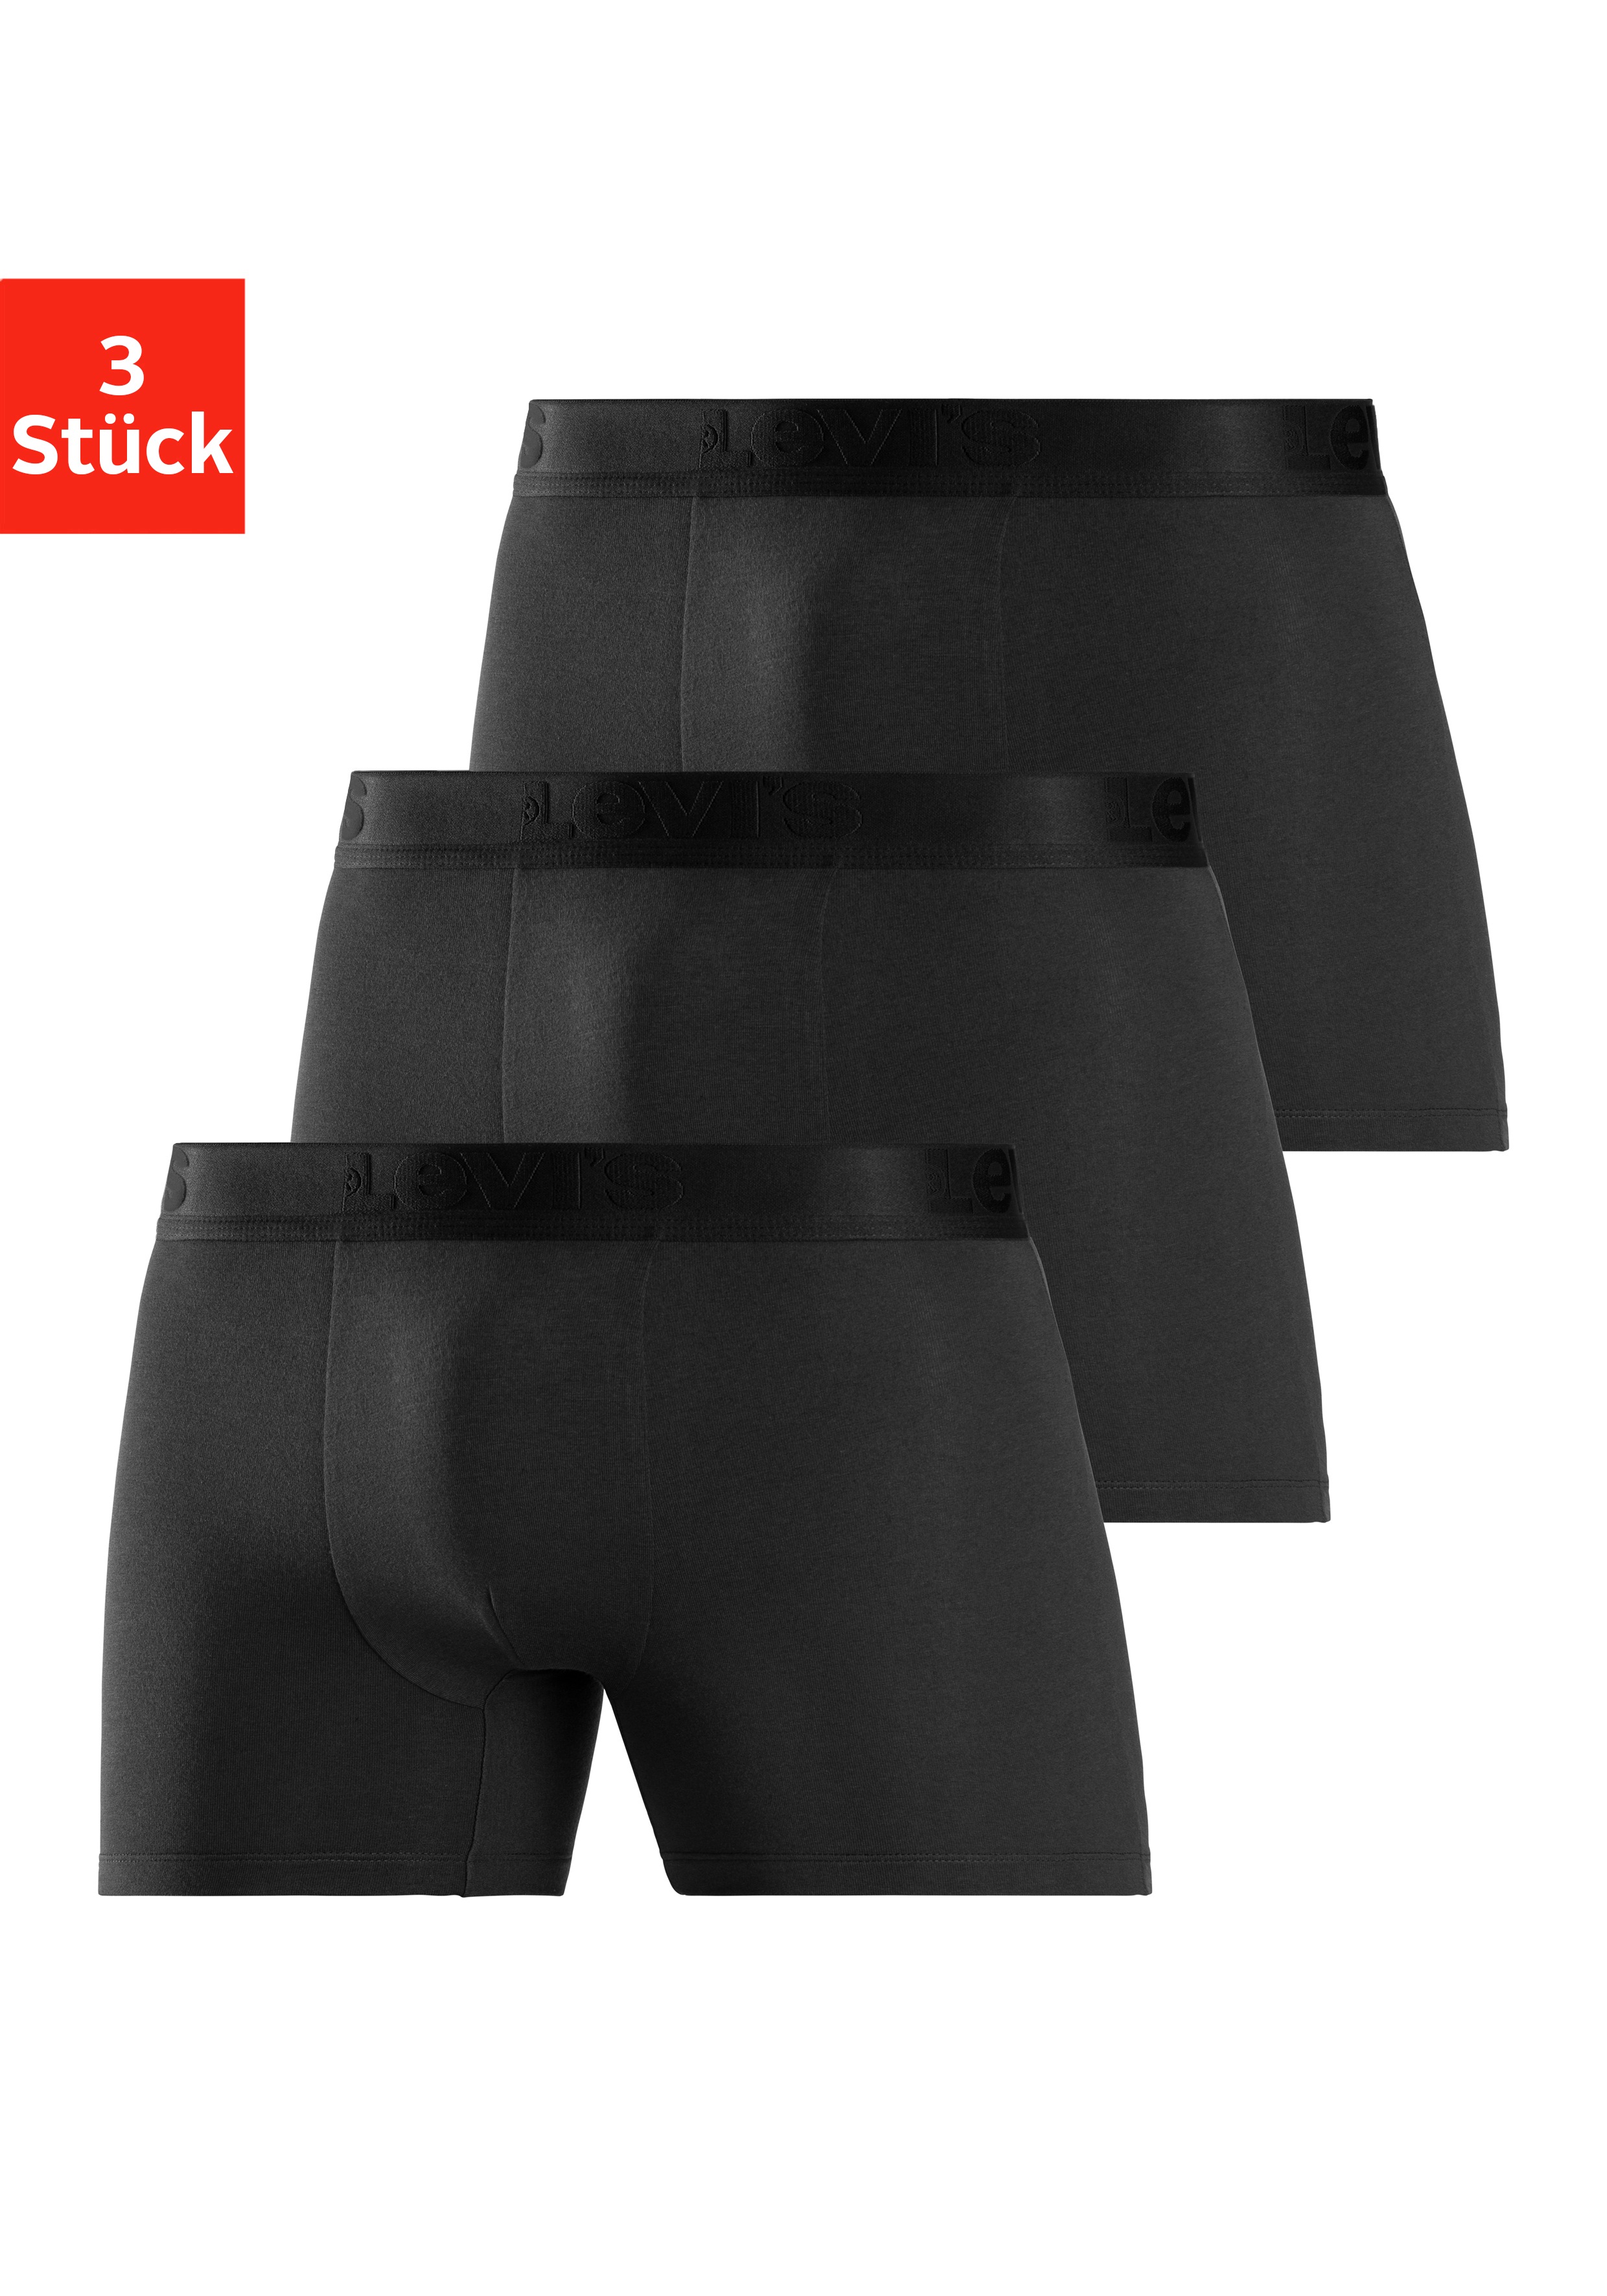 Levi's Mens Premium Men's Briefs (3 Pack) Boxer Shorts, Black, XXL (3er Pack)